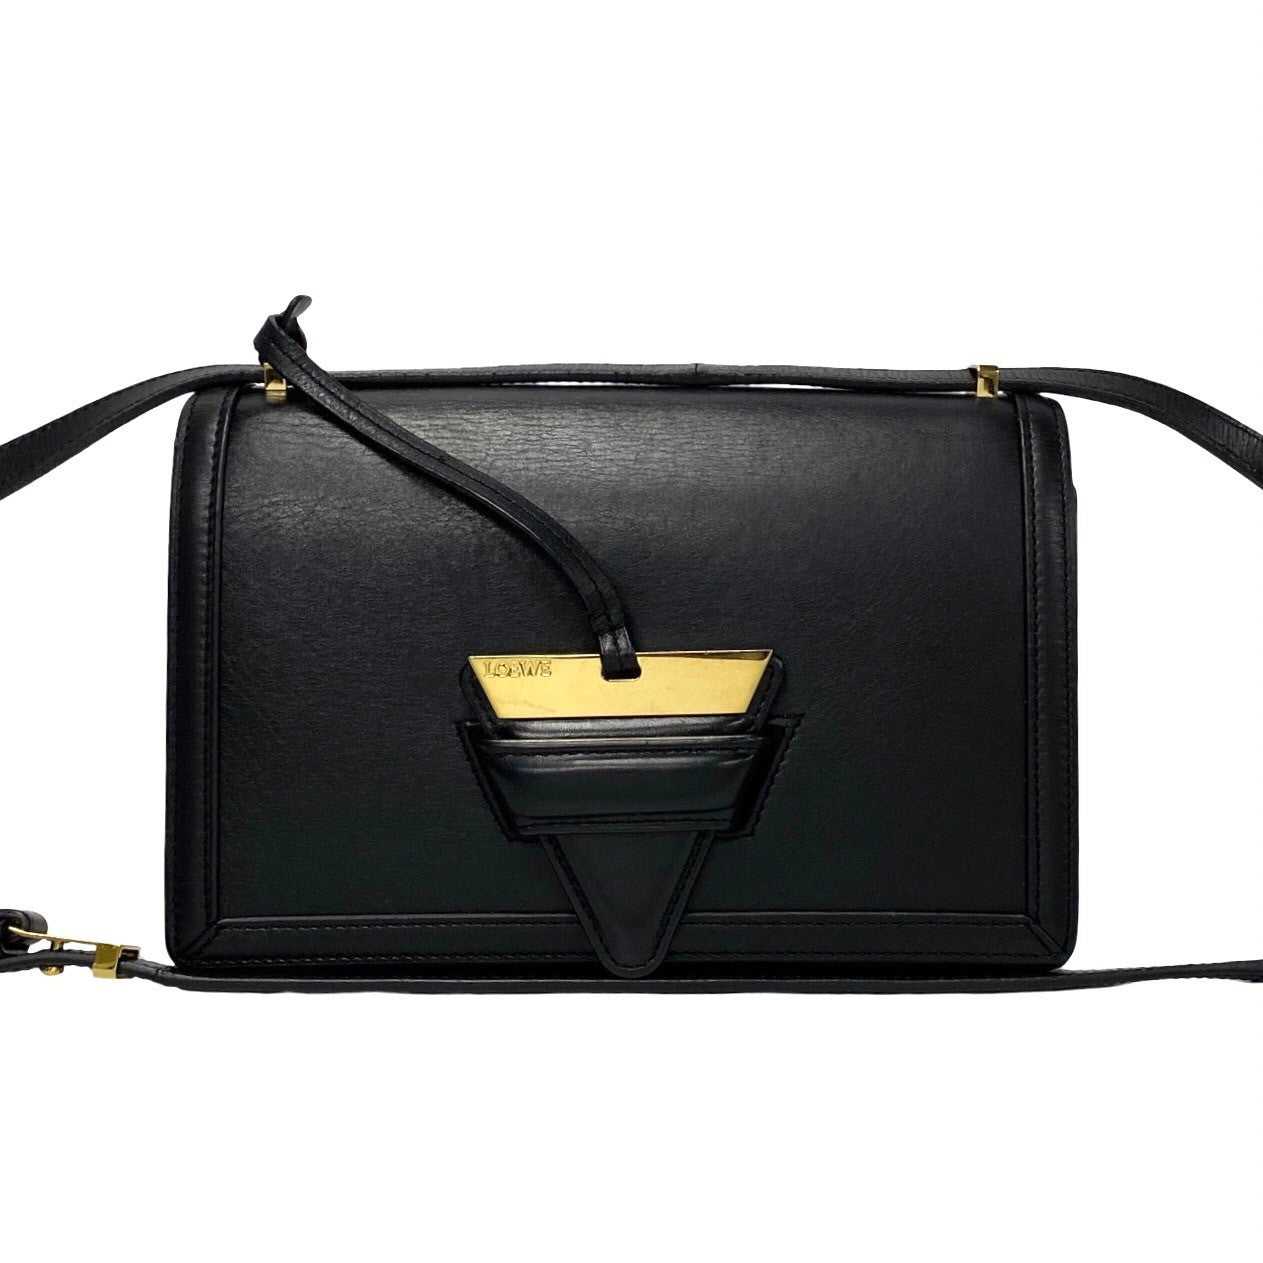 Loewe Barcelona Small Handbag Leather Shoulder Bag 无法识别 in Good condition